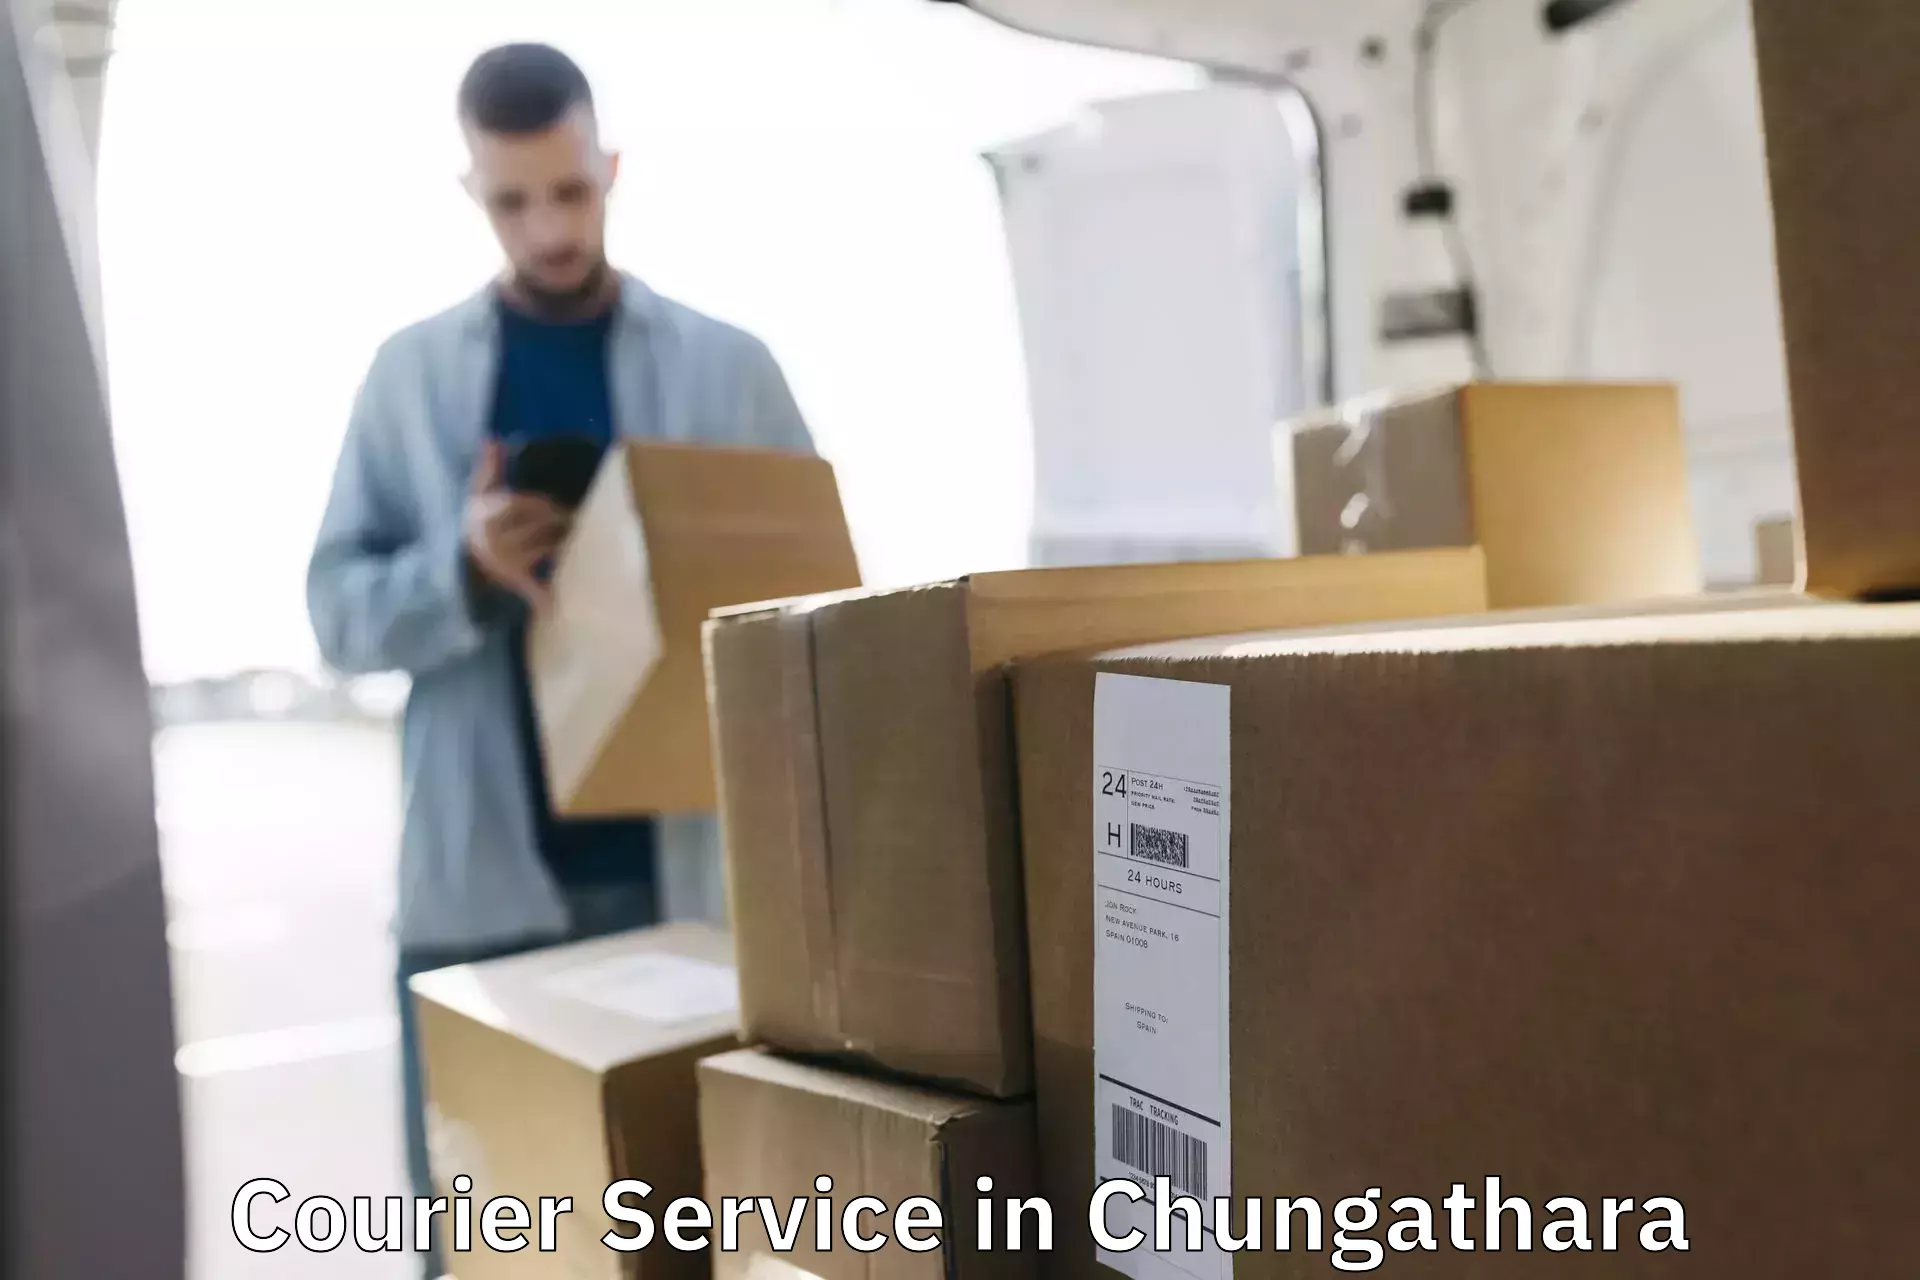 Supply chain efficiency in Chungathara